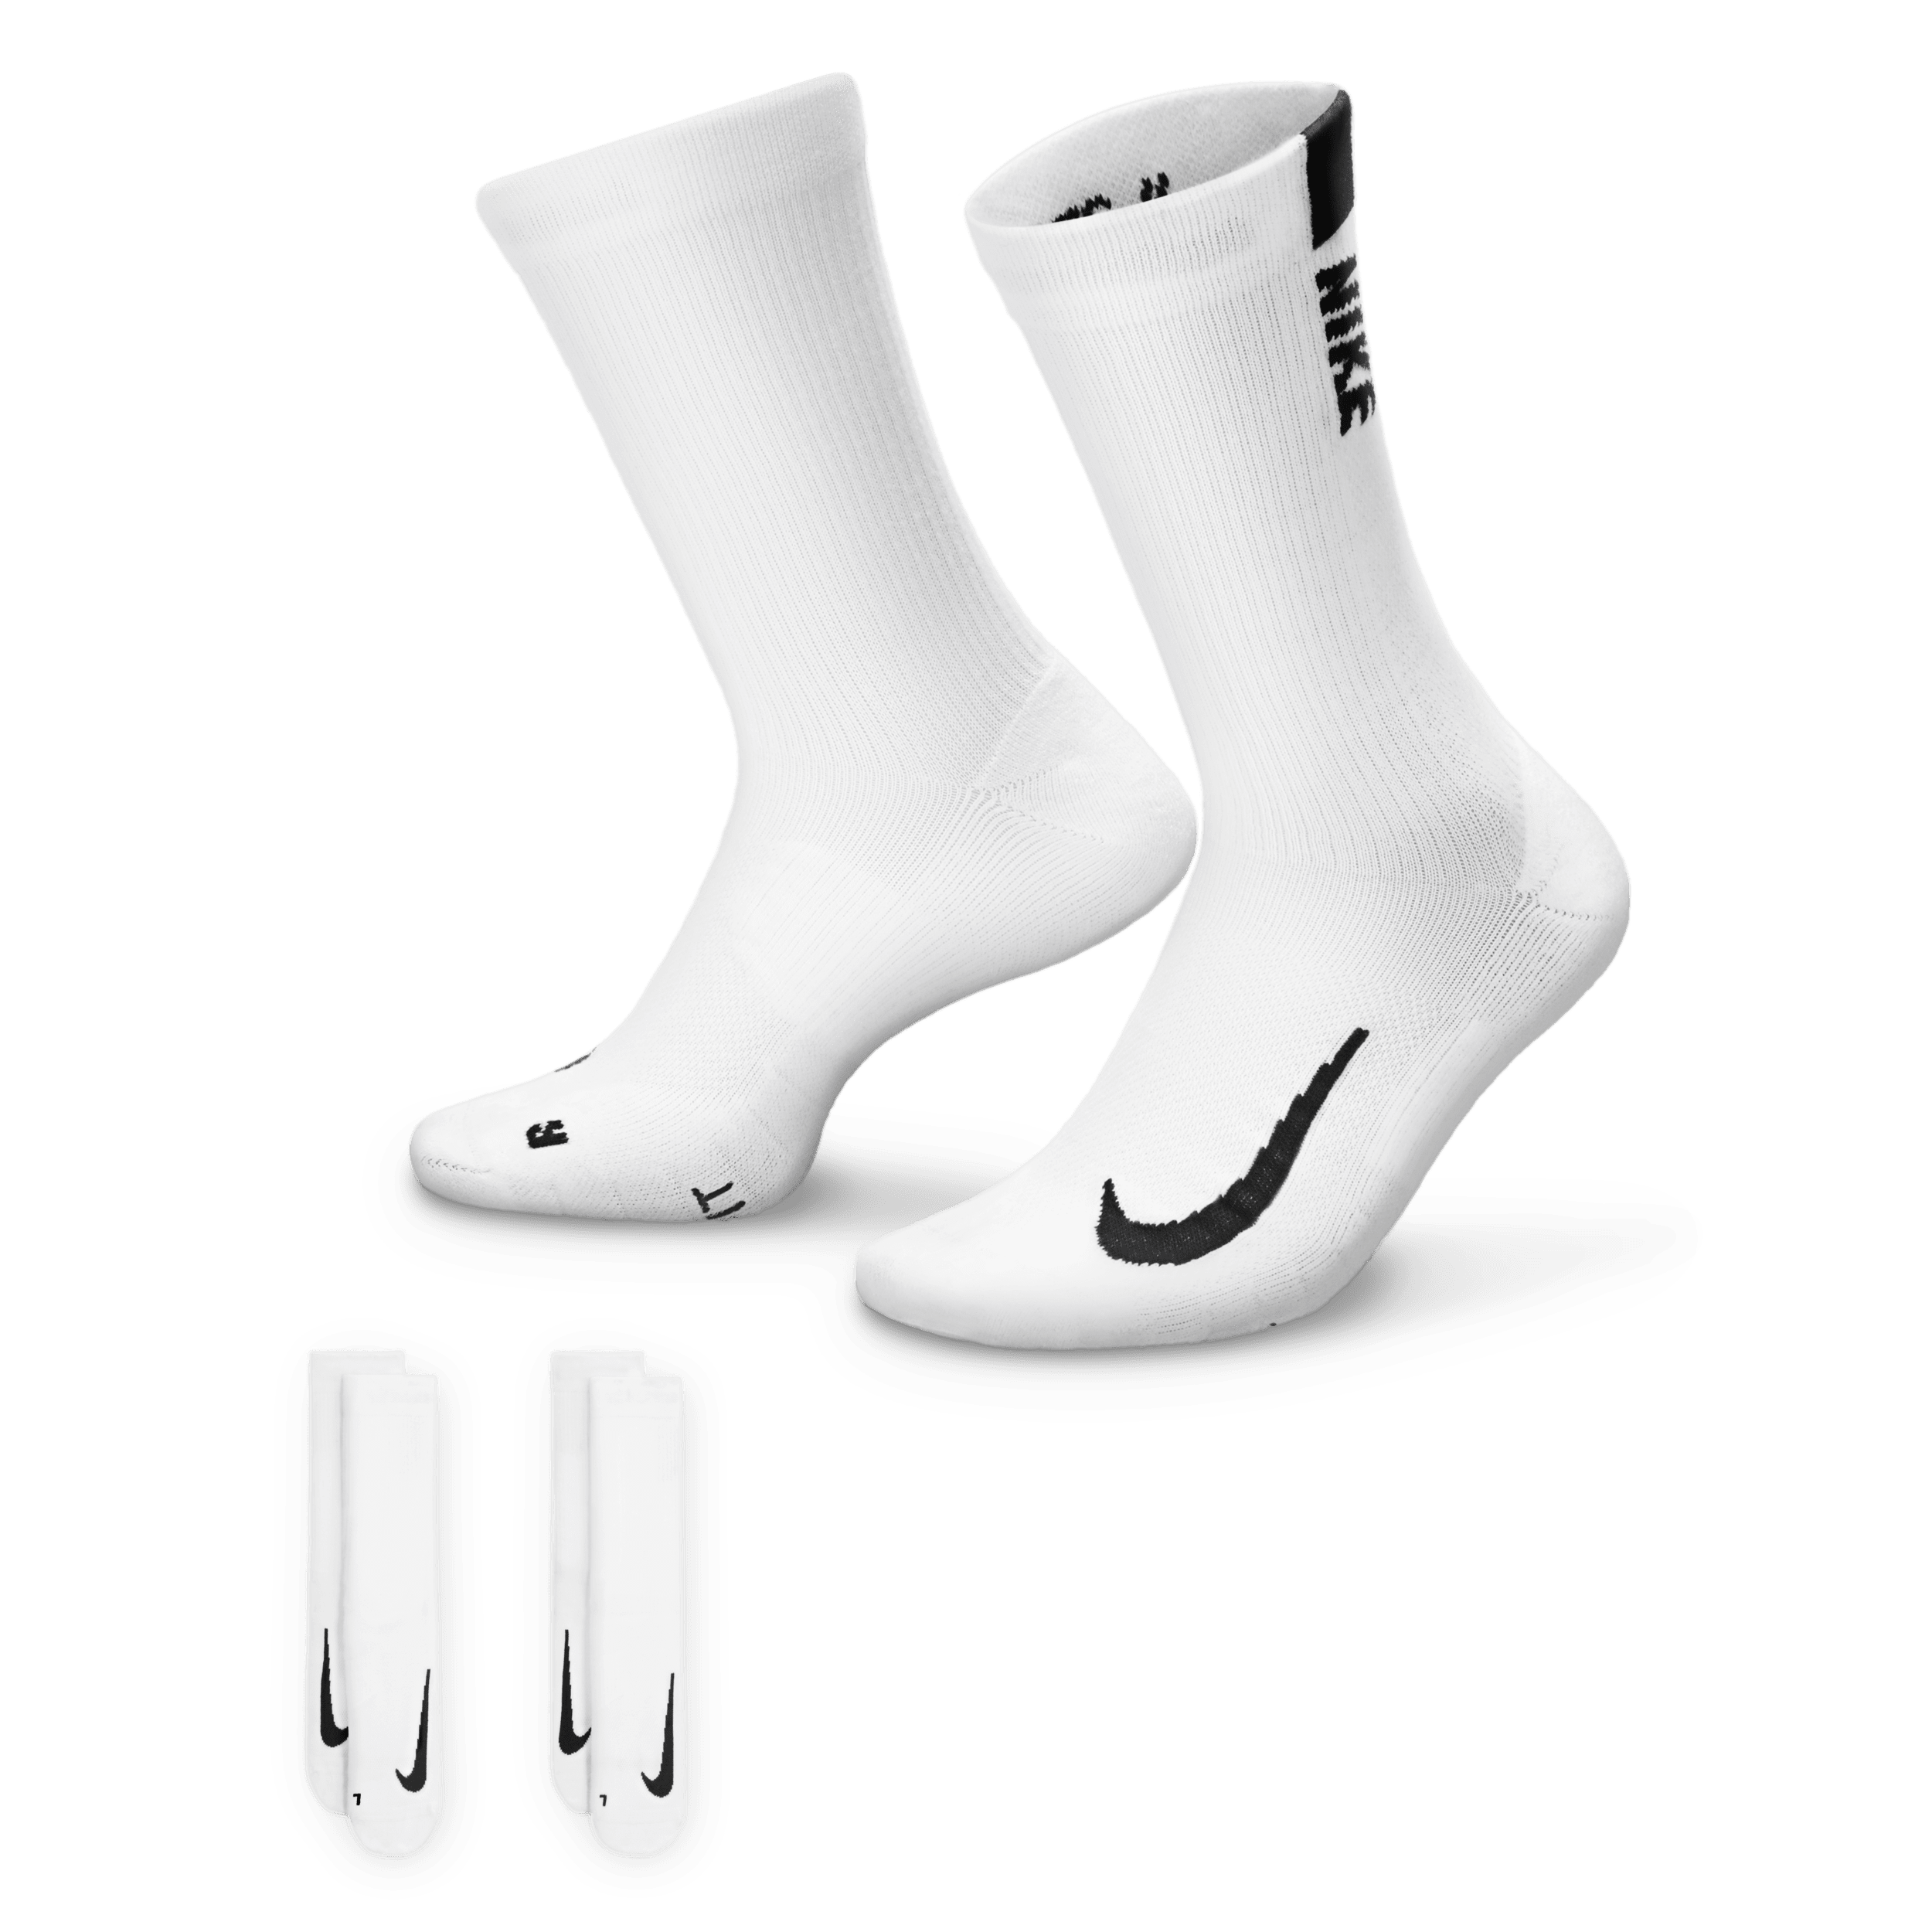 Calzettoni Nike Multiplier (2 paia) - Bianco